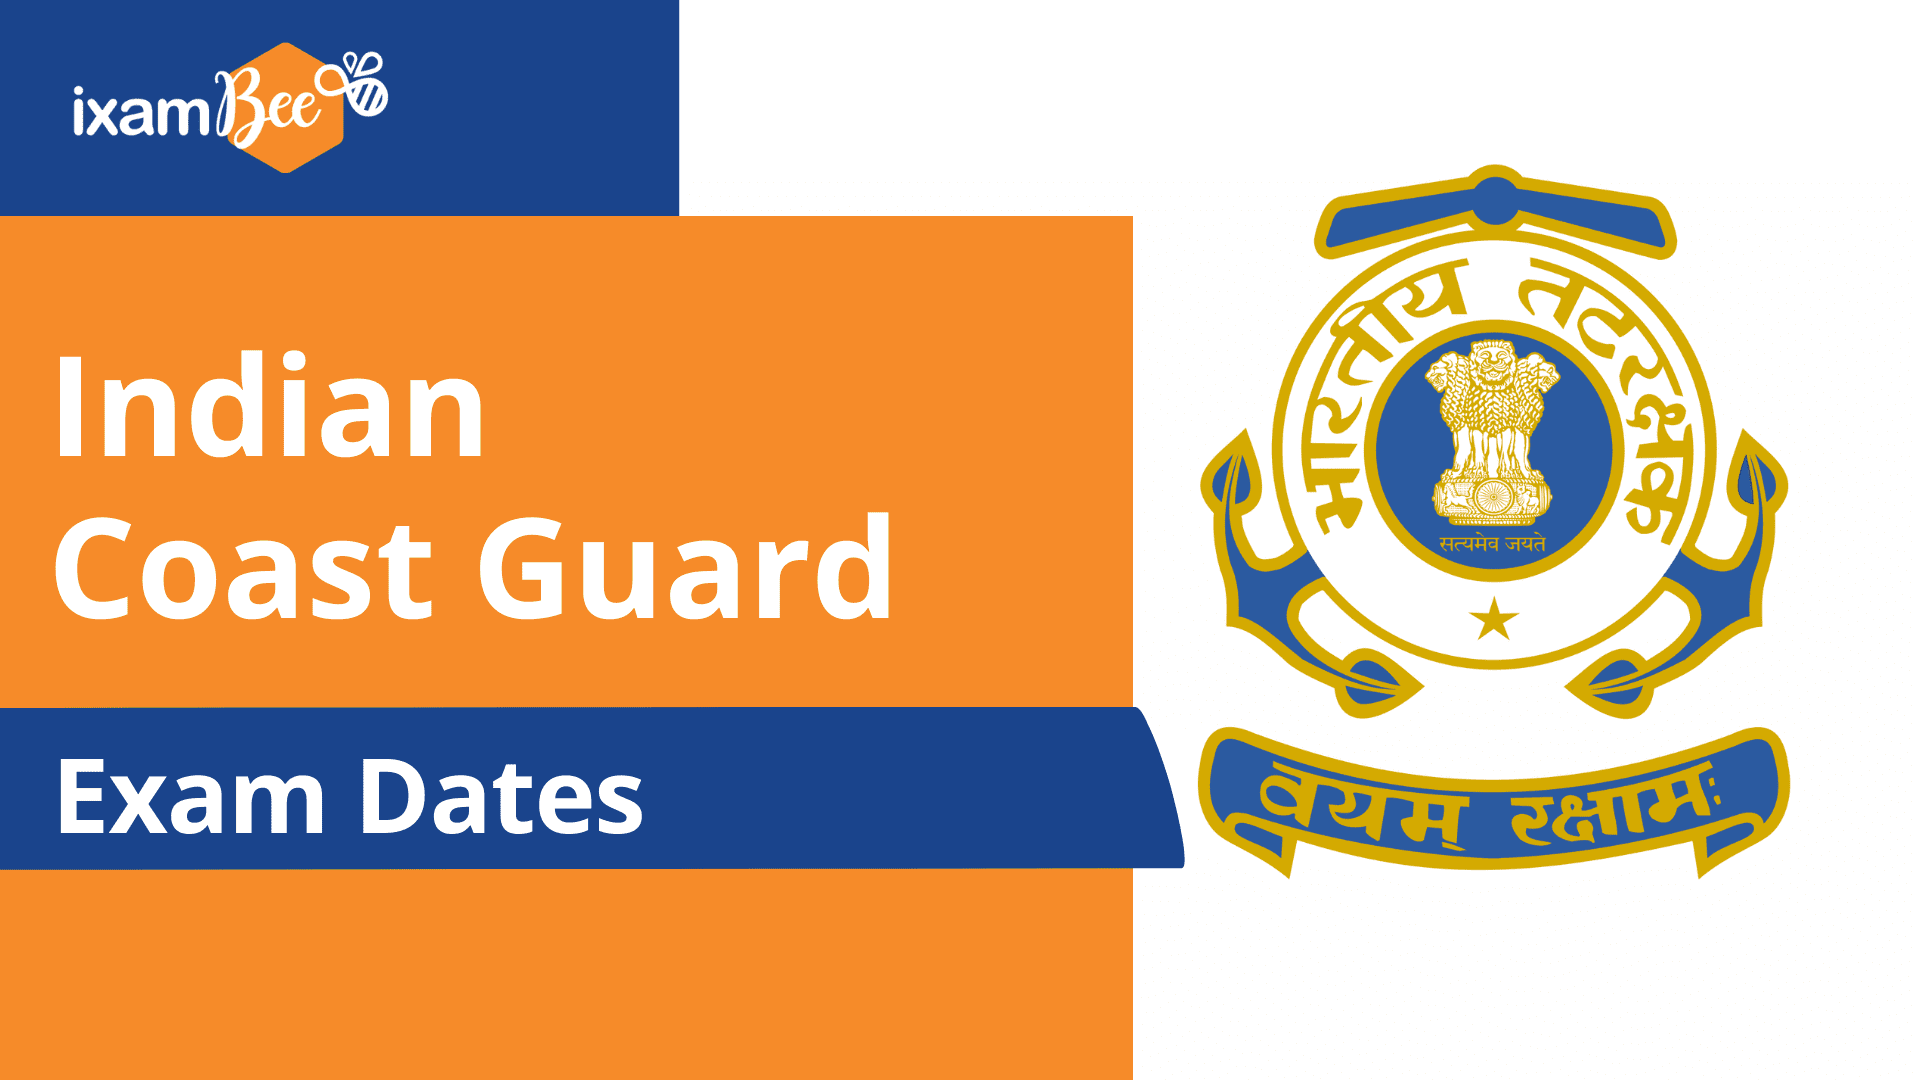 Indian Coast Guard Recruitment Exam Dates